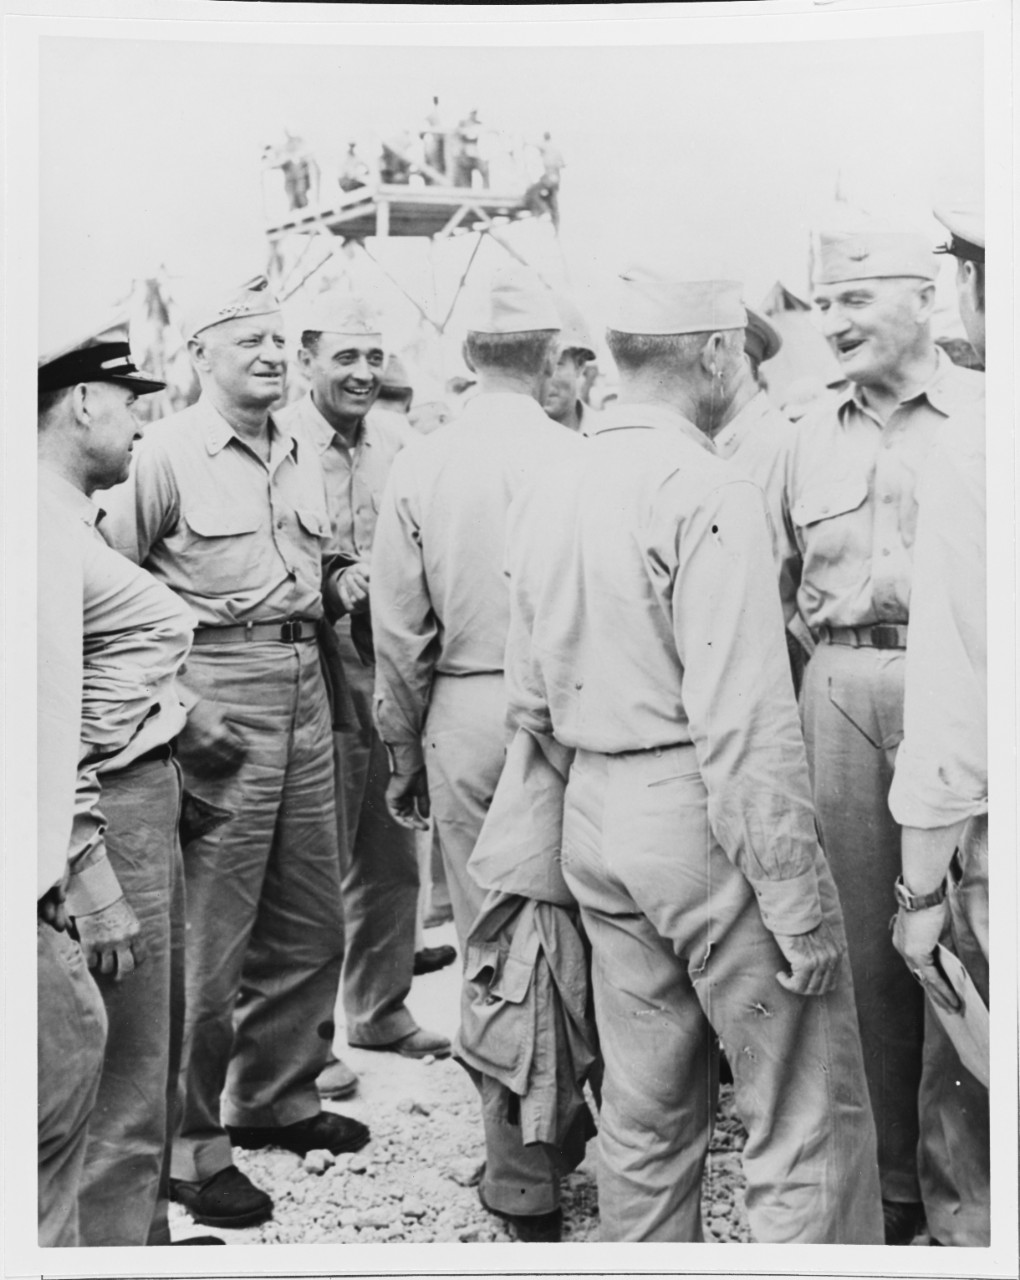 ADM C.W. Nimitz (Cincpac) inspected the Betio island, 27 Nov. 1943